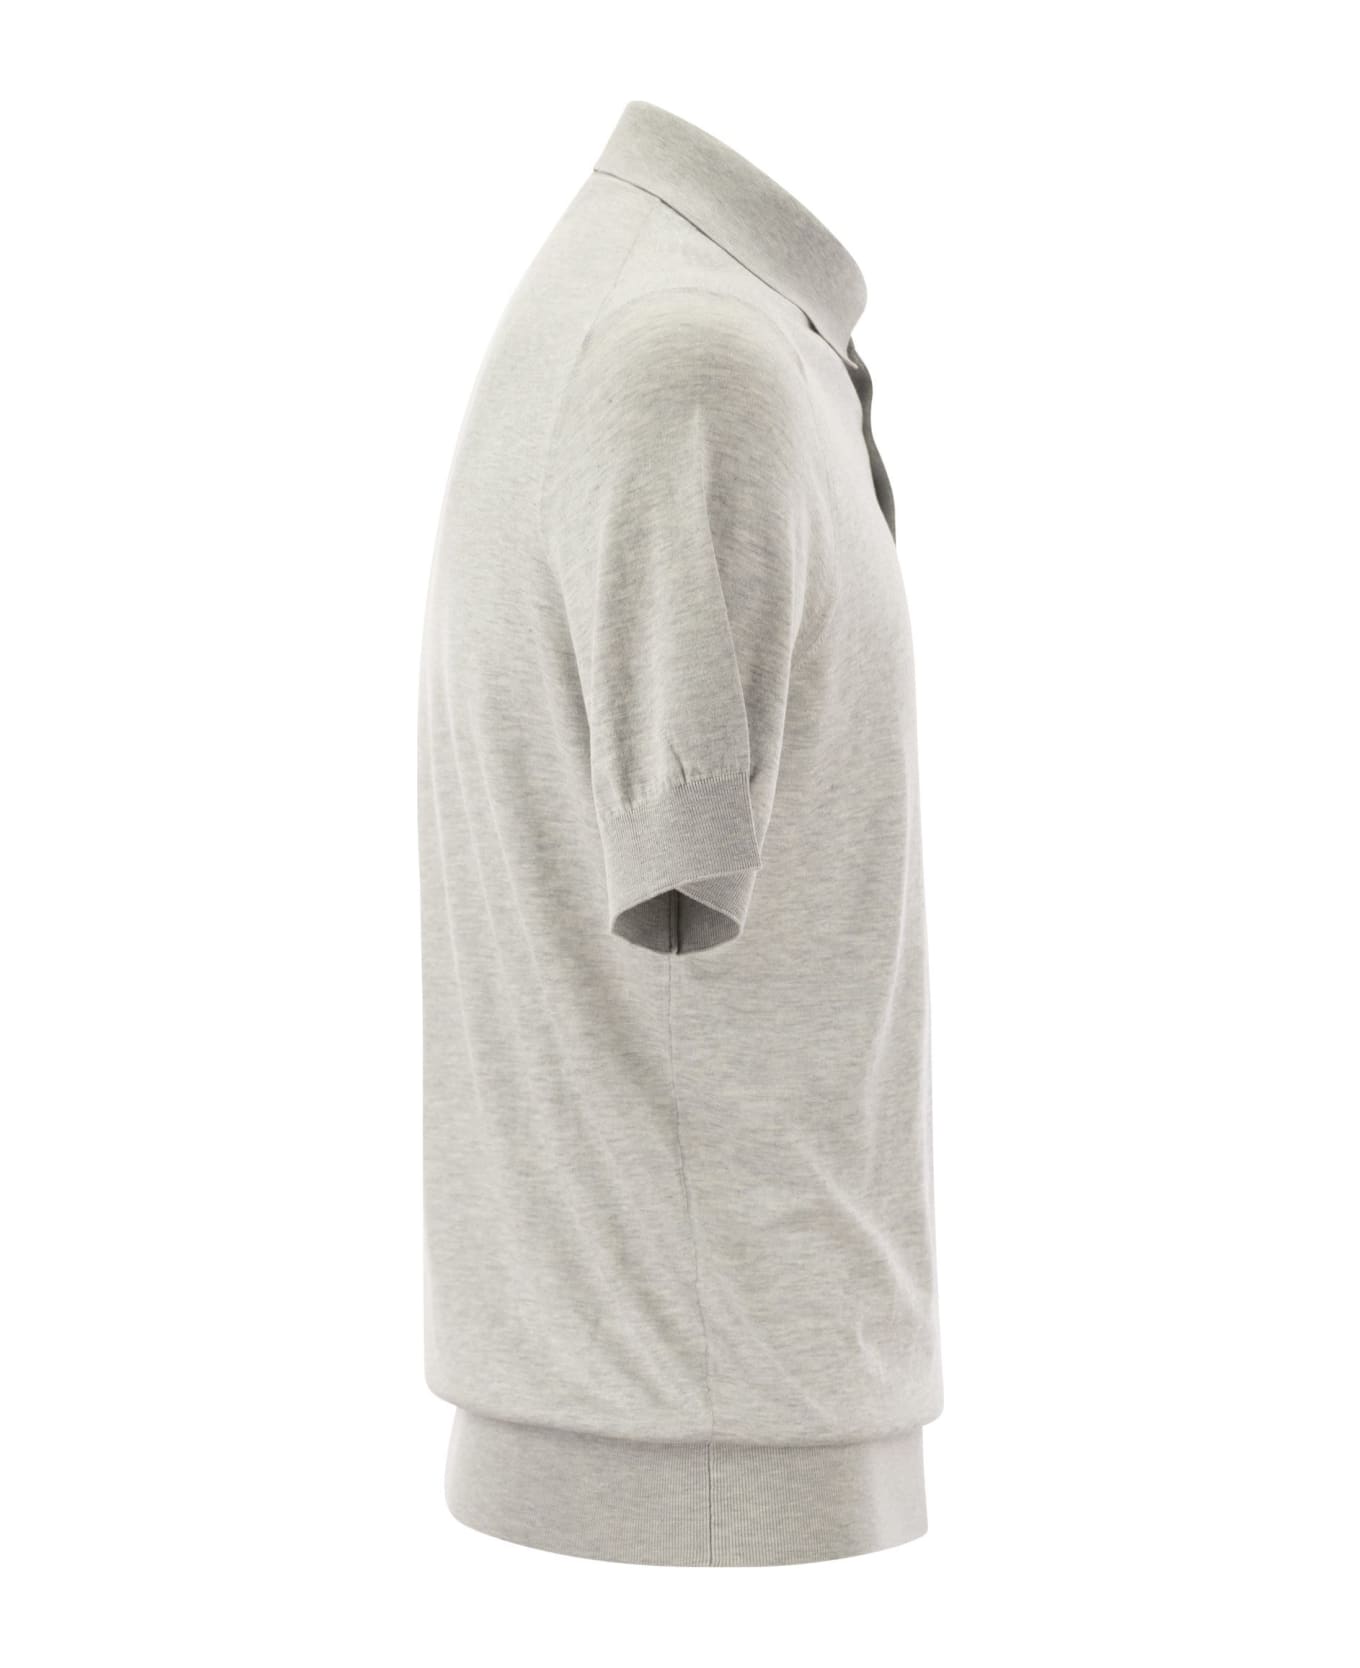 Brunello Cucinelli Polo Shirt - Light Grey ポロシャツ